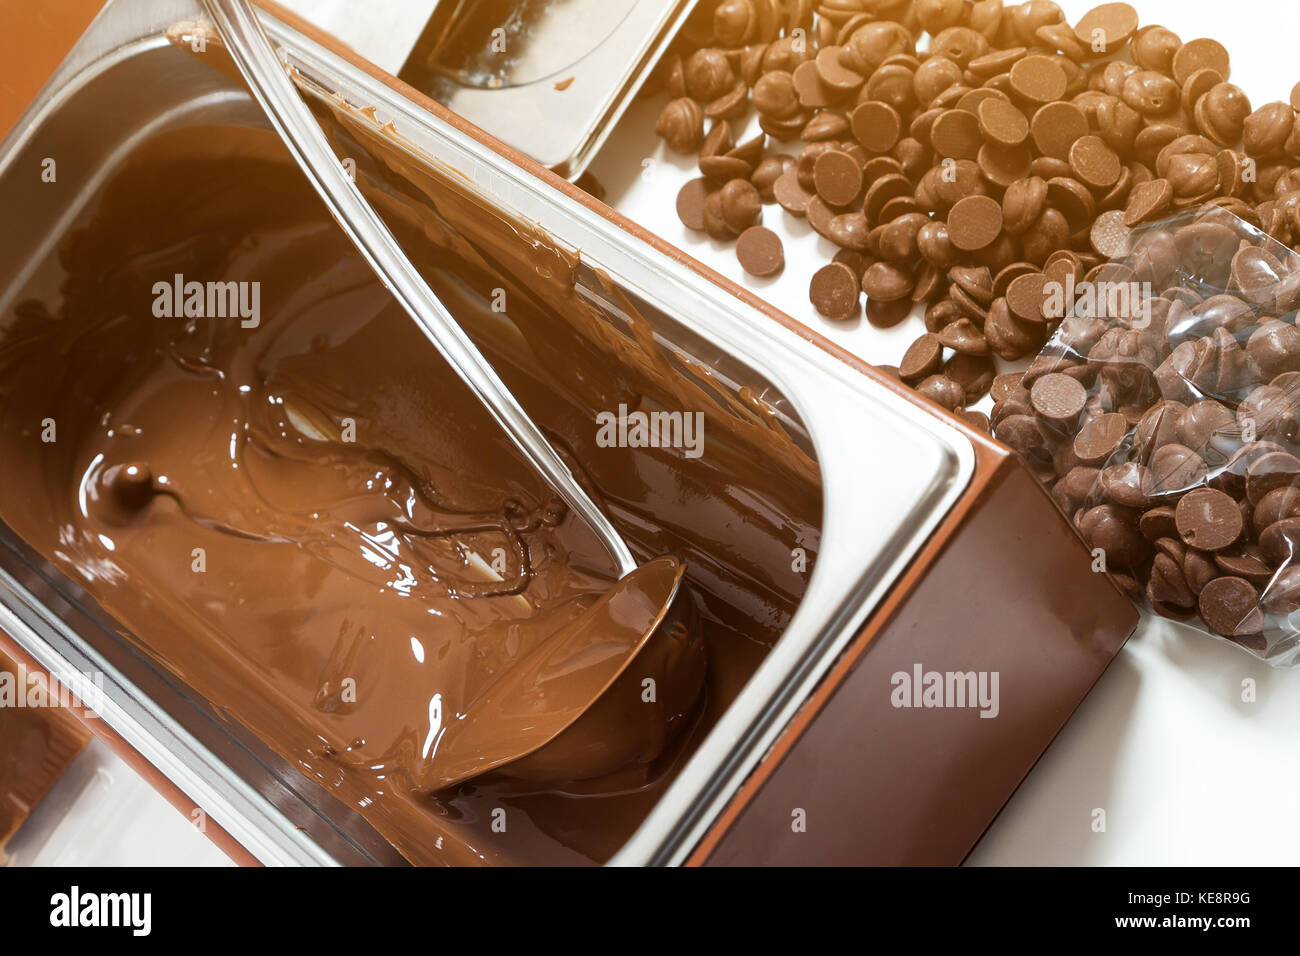 https://c8.alamy.com/comp/KE8R9G/a-close-up-of-a-large-mettalic-container-with-liquid-hot-chocolate-KE8R9G.jpg